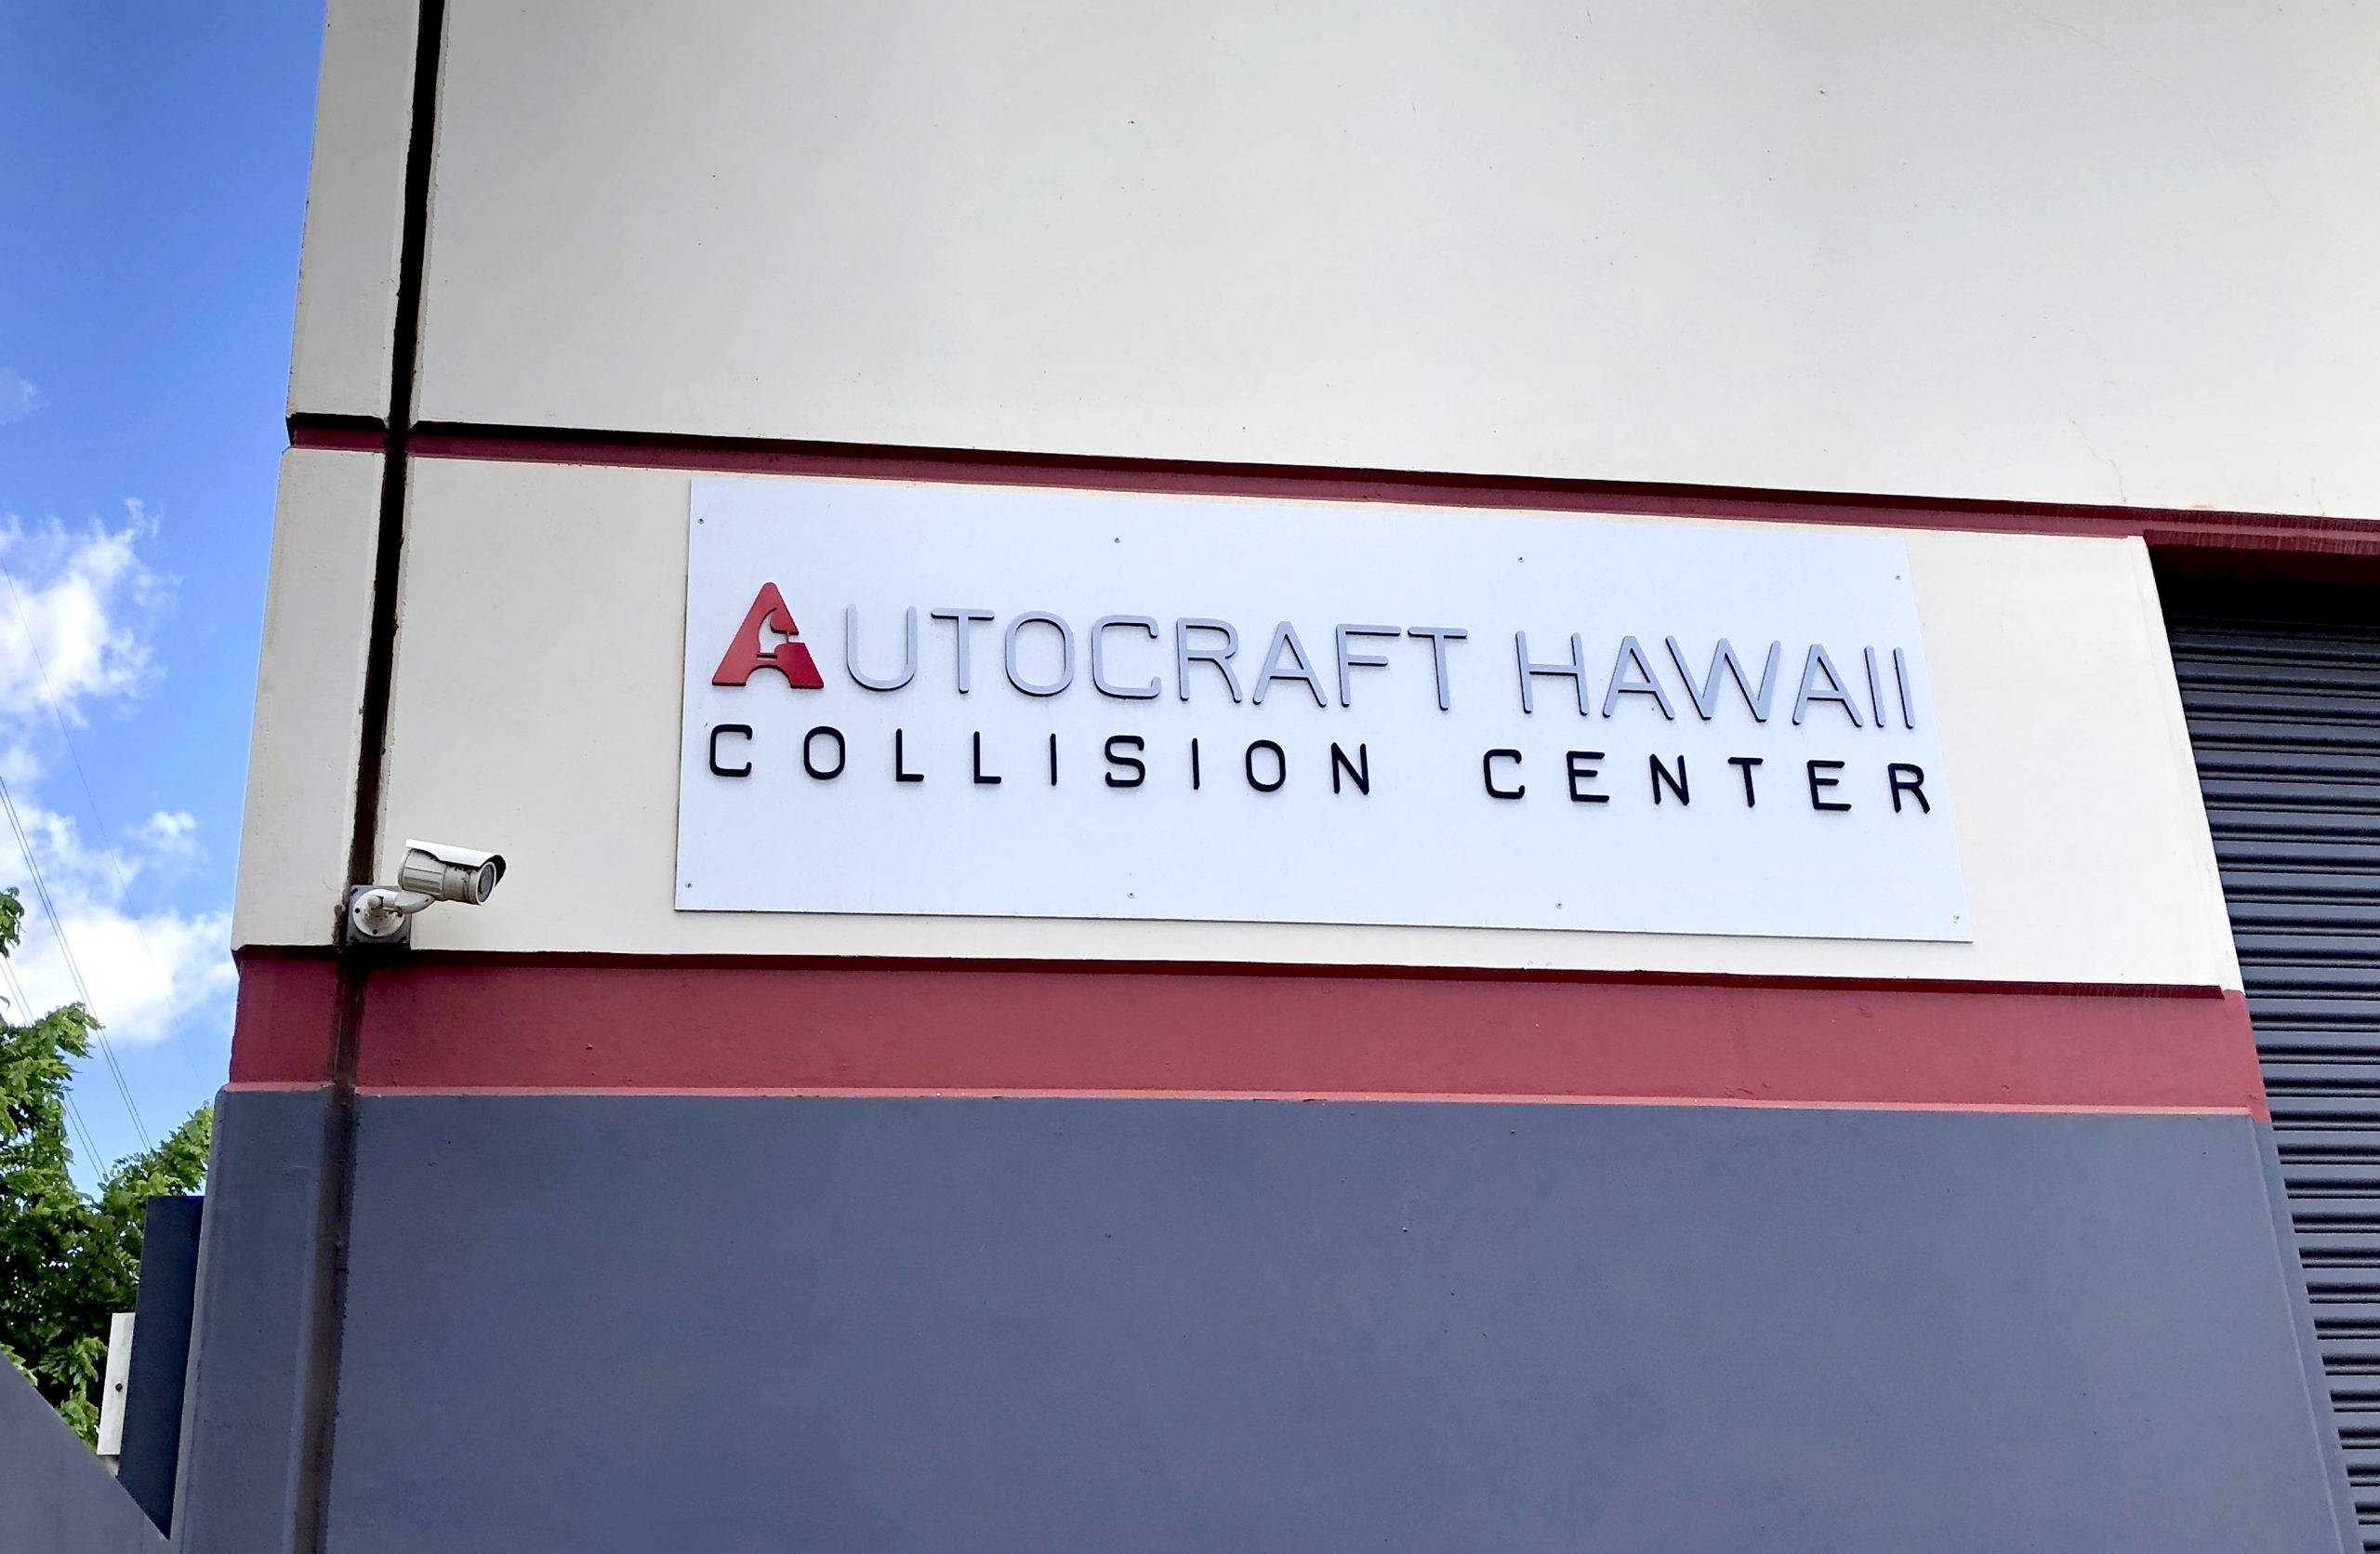 About Autocraft Hawaii